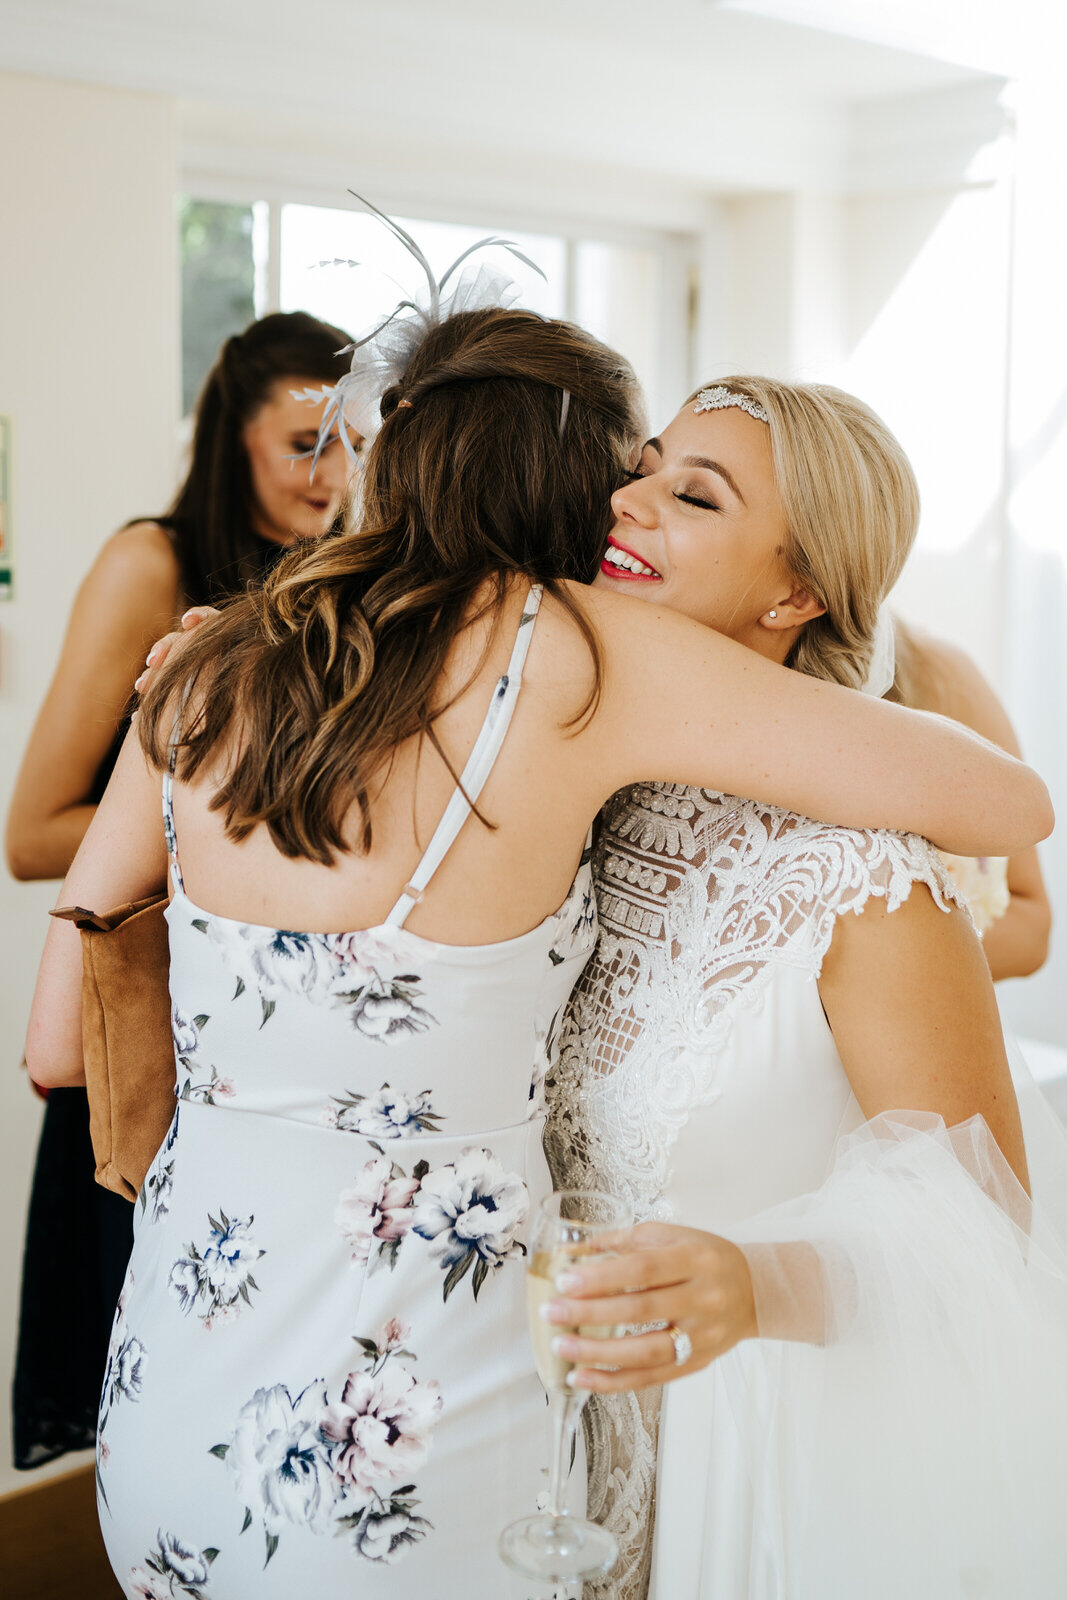 Close friend hugs bride as guests start to arrive at Pembroke Lodge for wedding celebrations